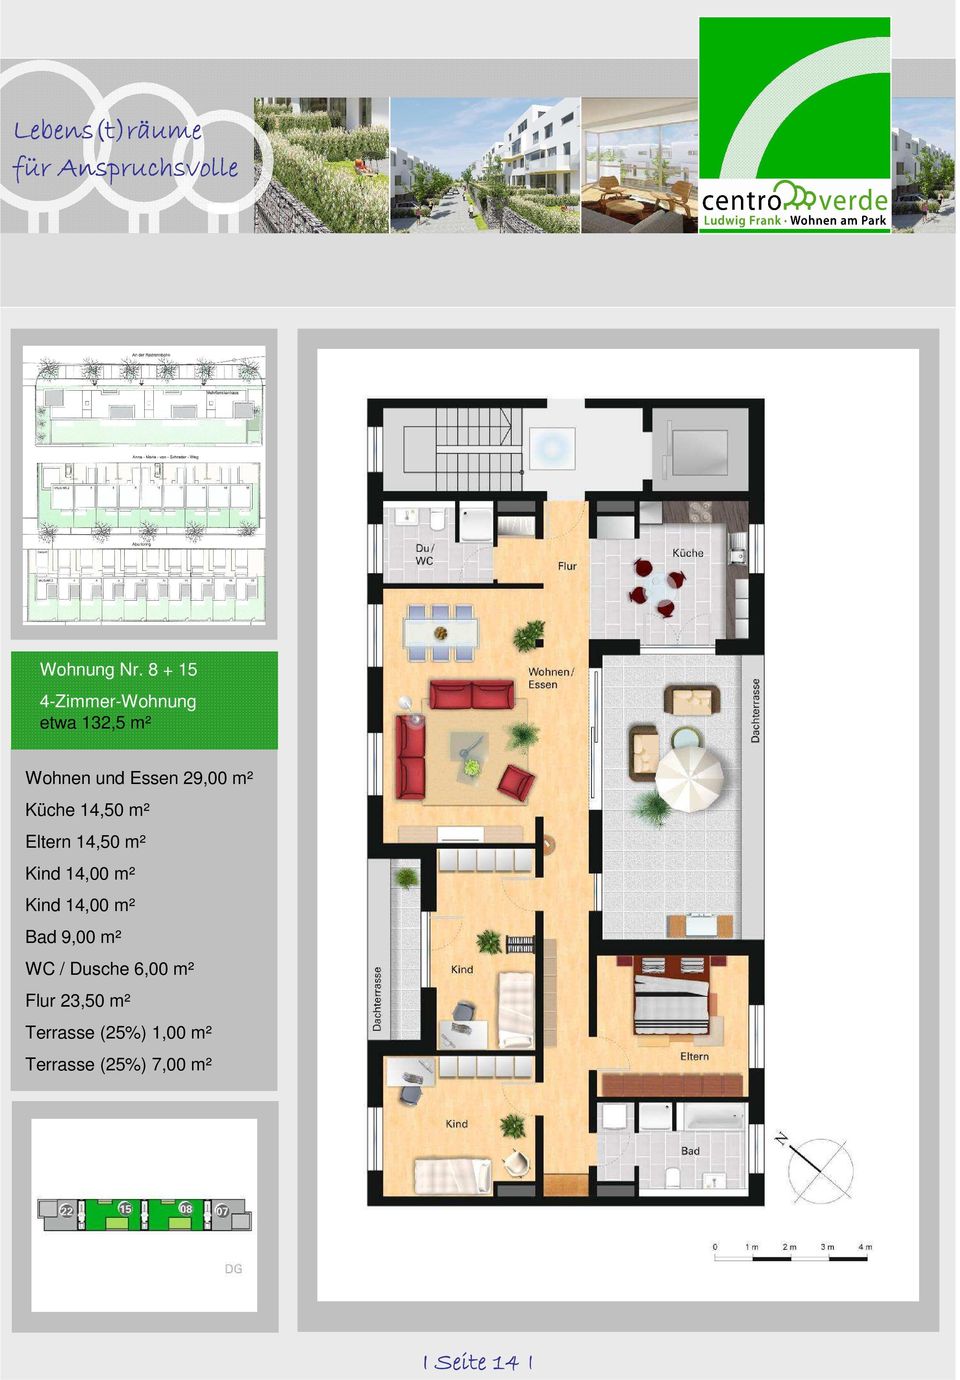 m² Küche 14,50 m² Eltern 14,50 m² Kind 14,00 m² Kind 14,00